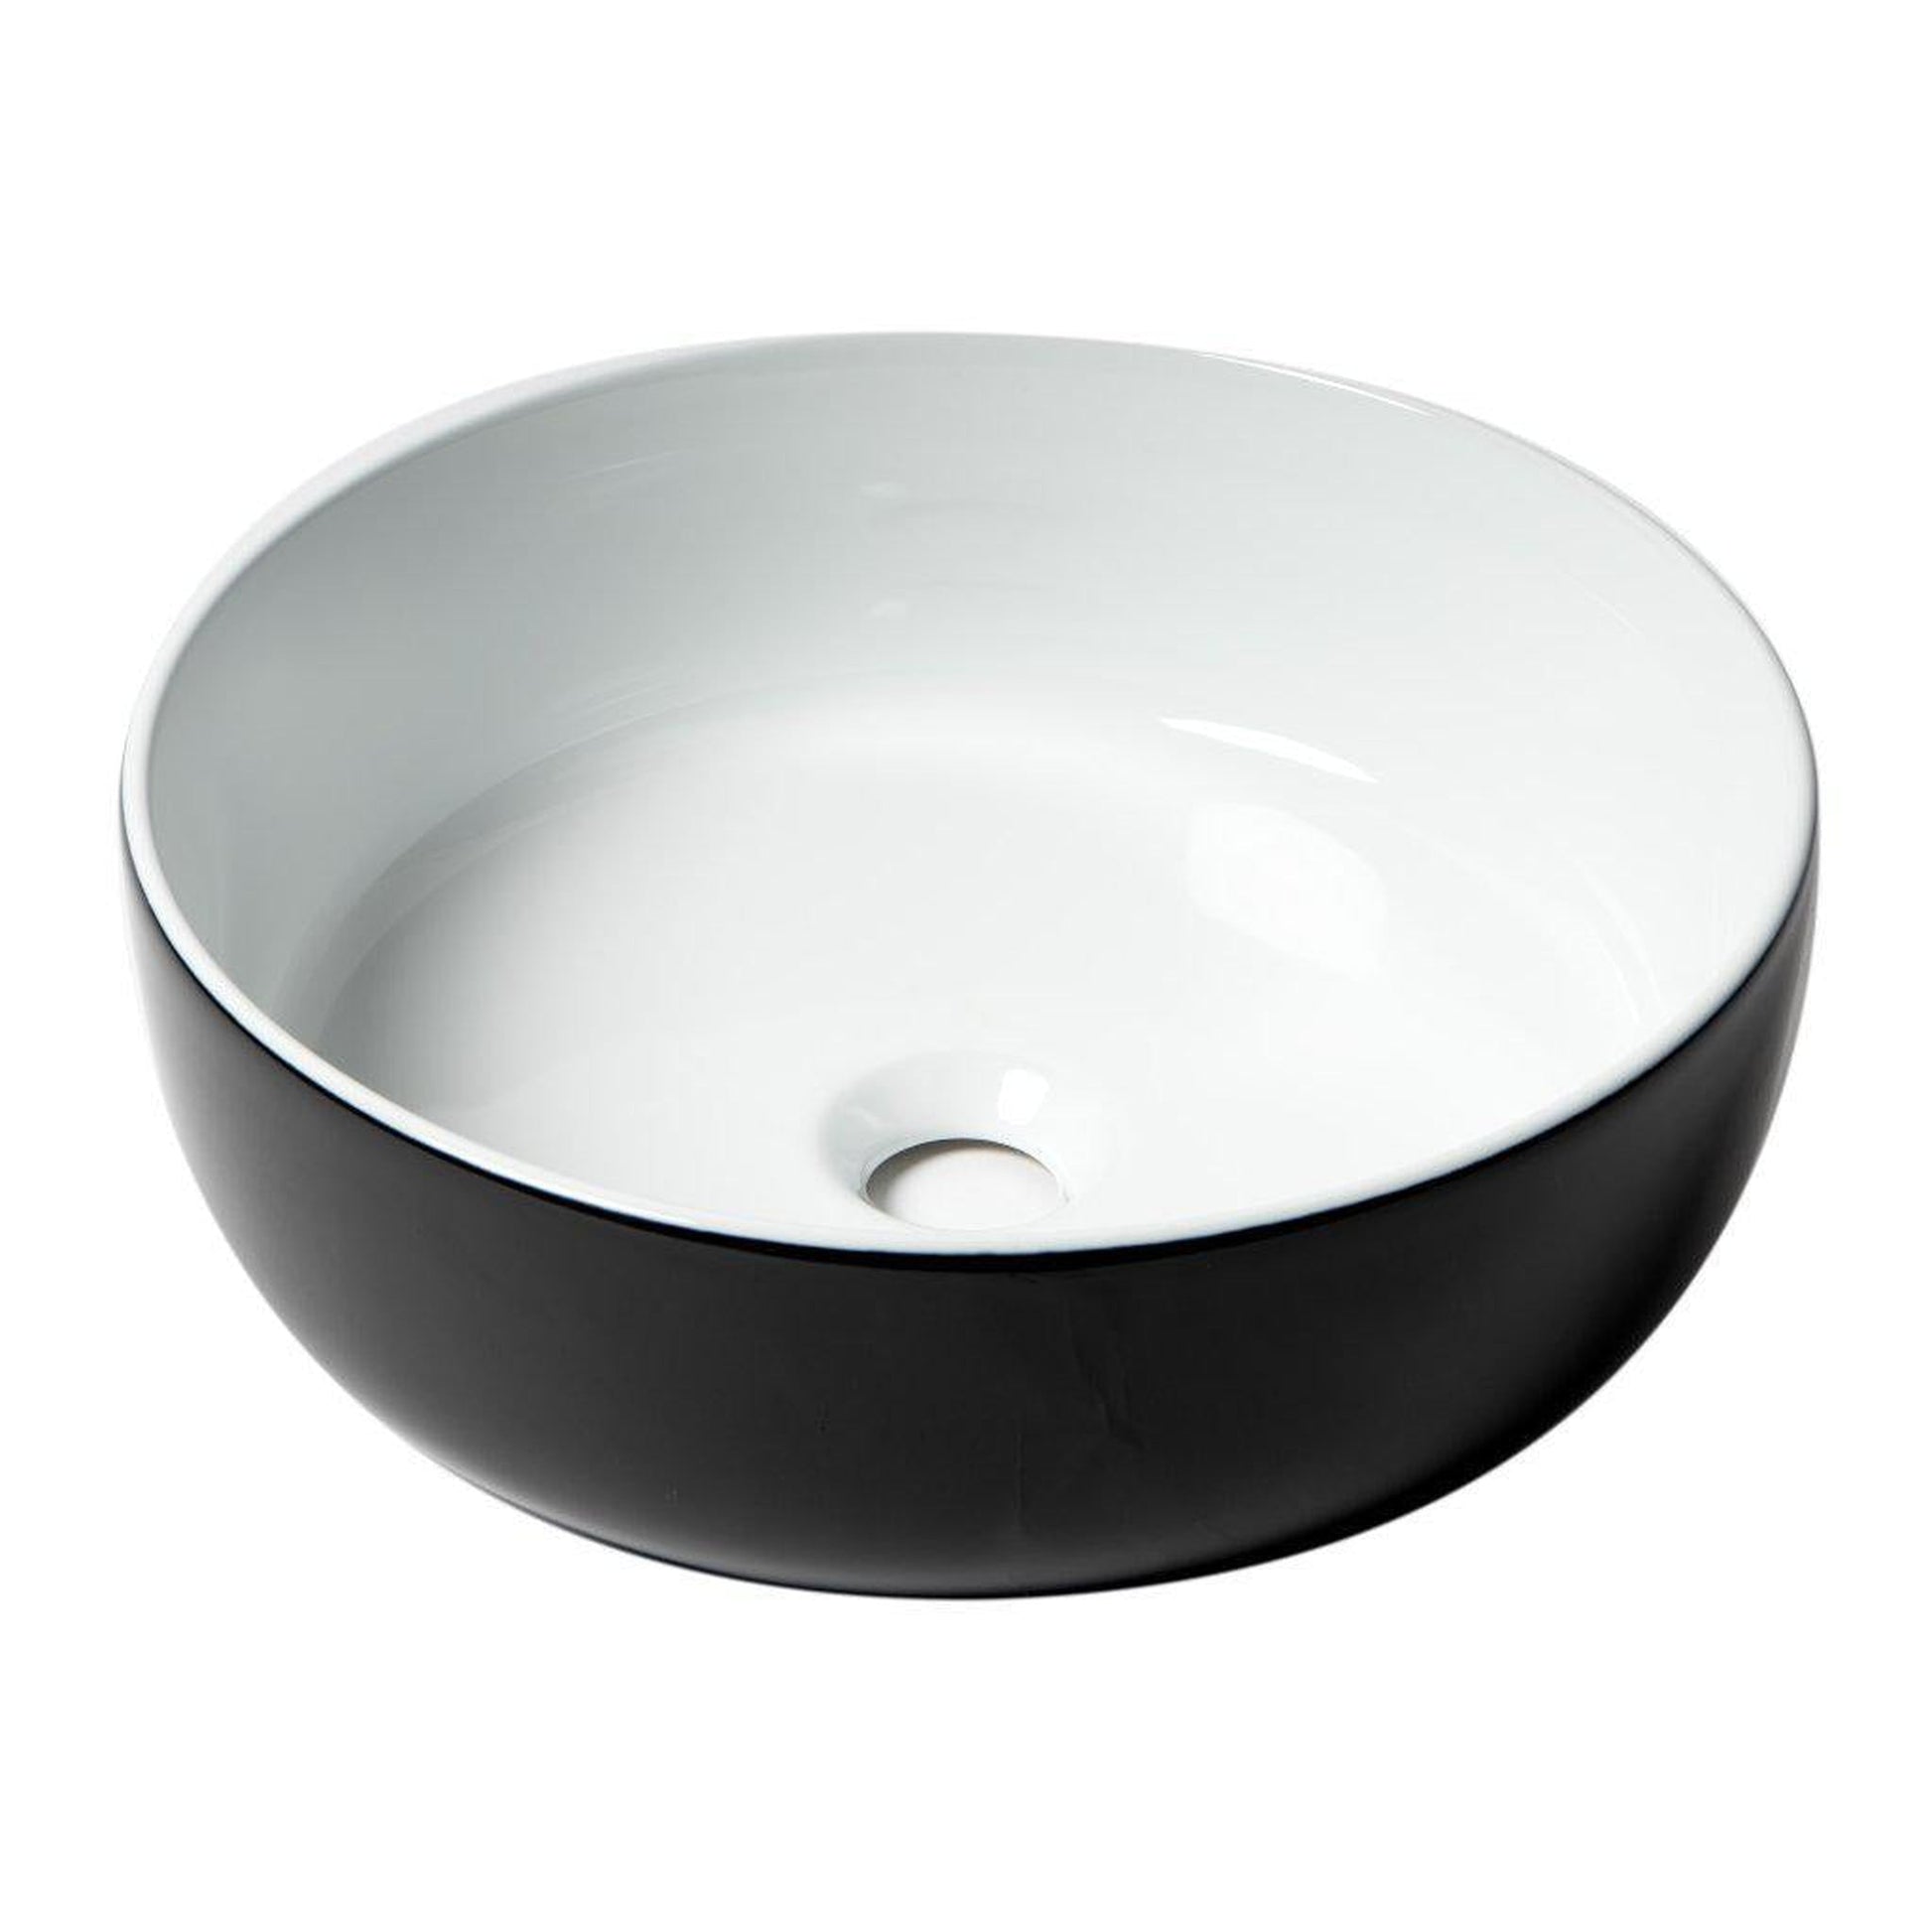 ALFI Brand ABC908 16" Black and White Above Mount Round Ceramic Bathroom Sink